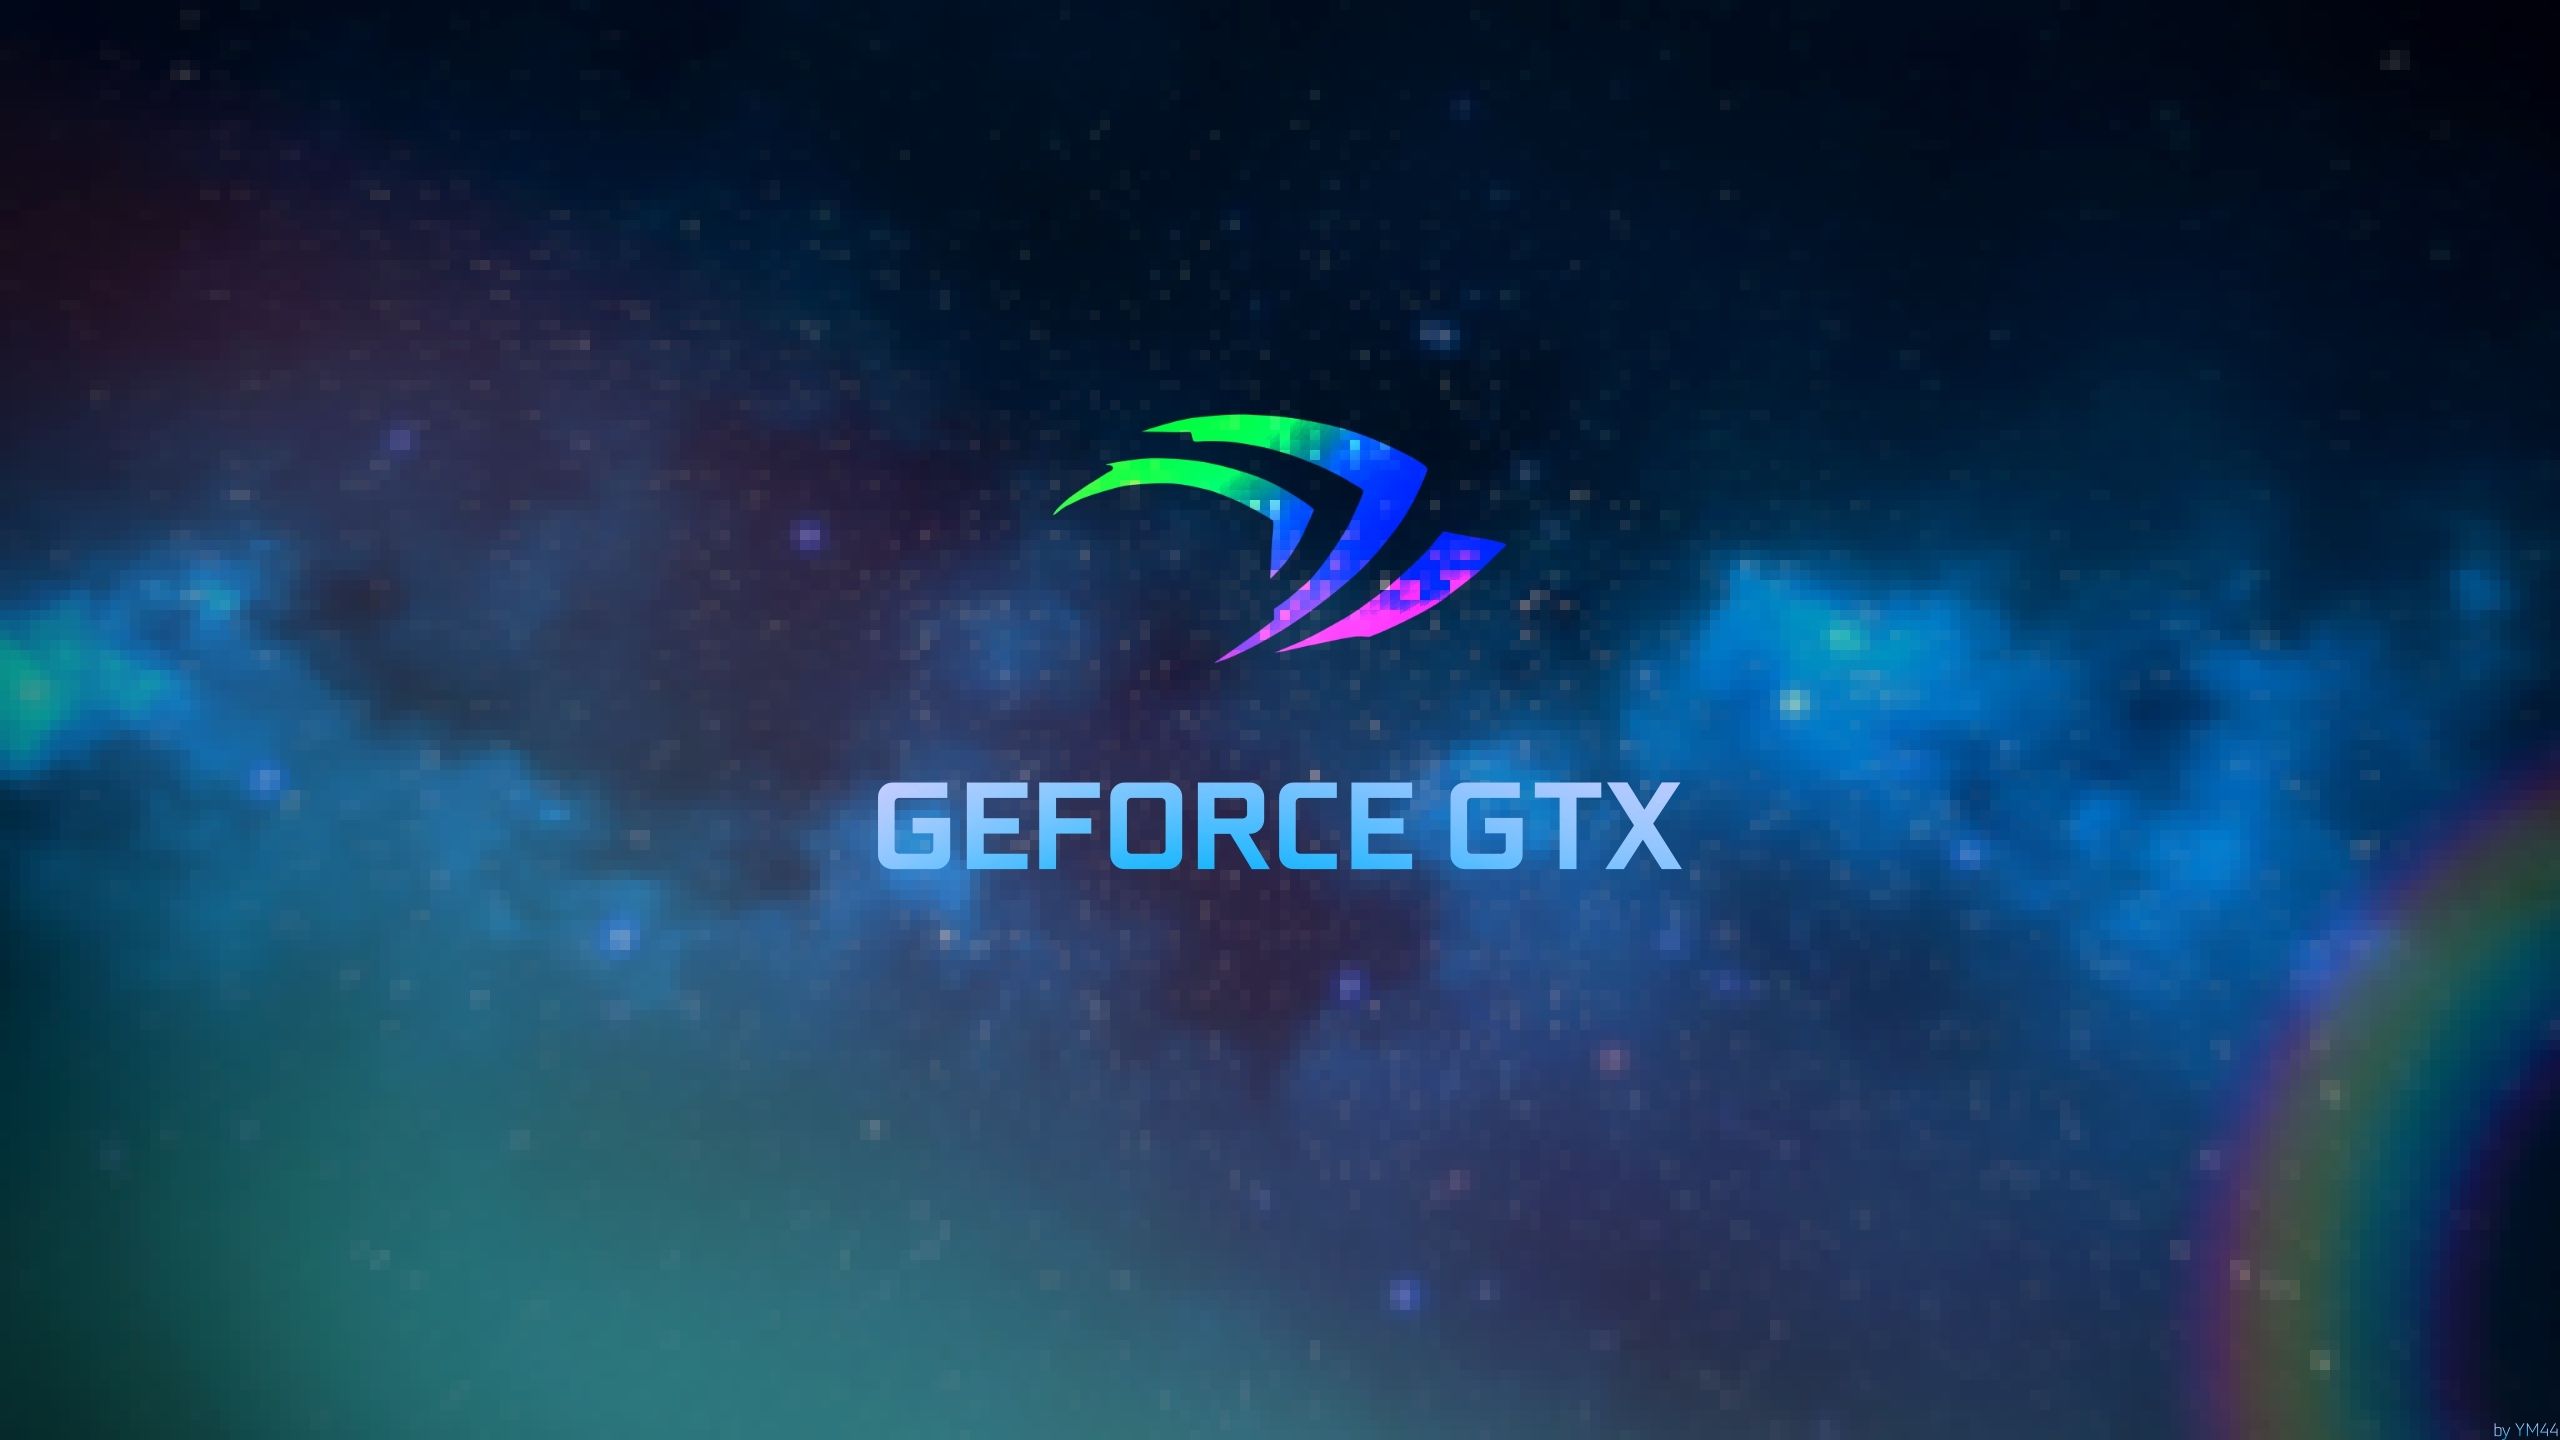 NVIDIA GeForce GTX Wallpaper Free NVIDIA GeForce GTX Background